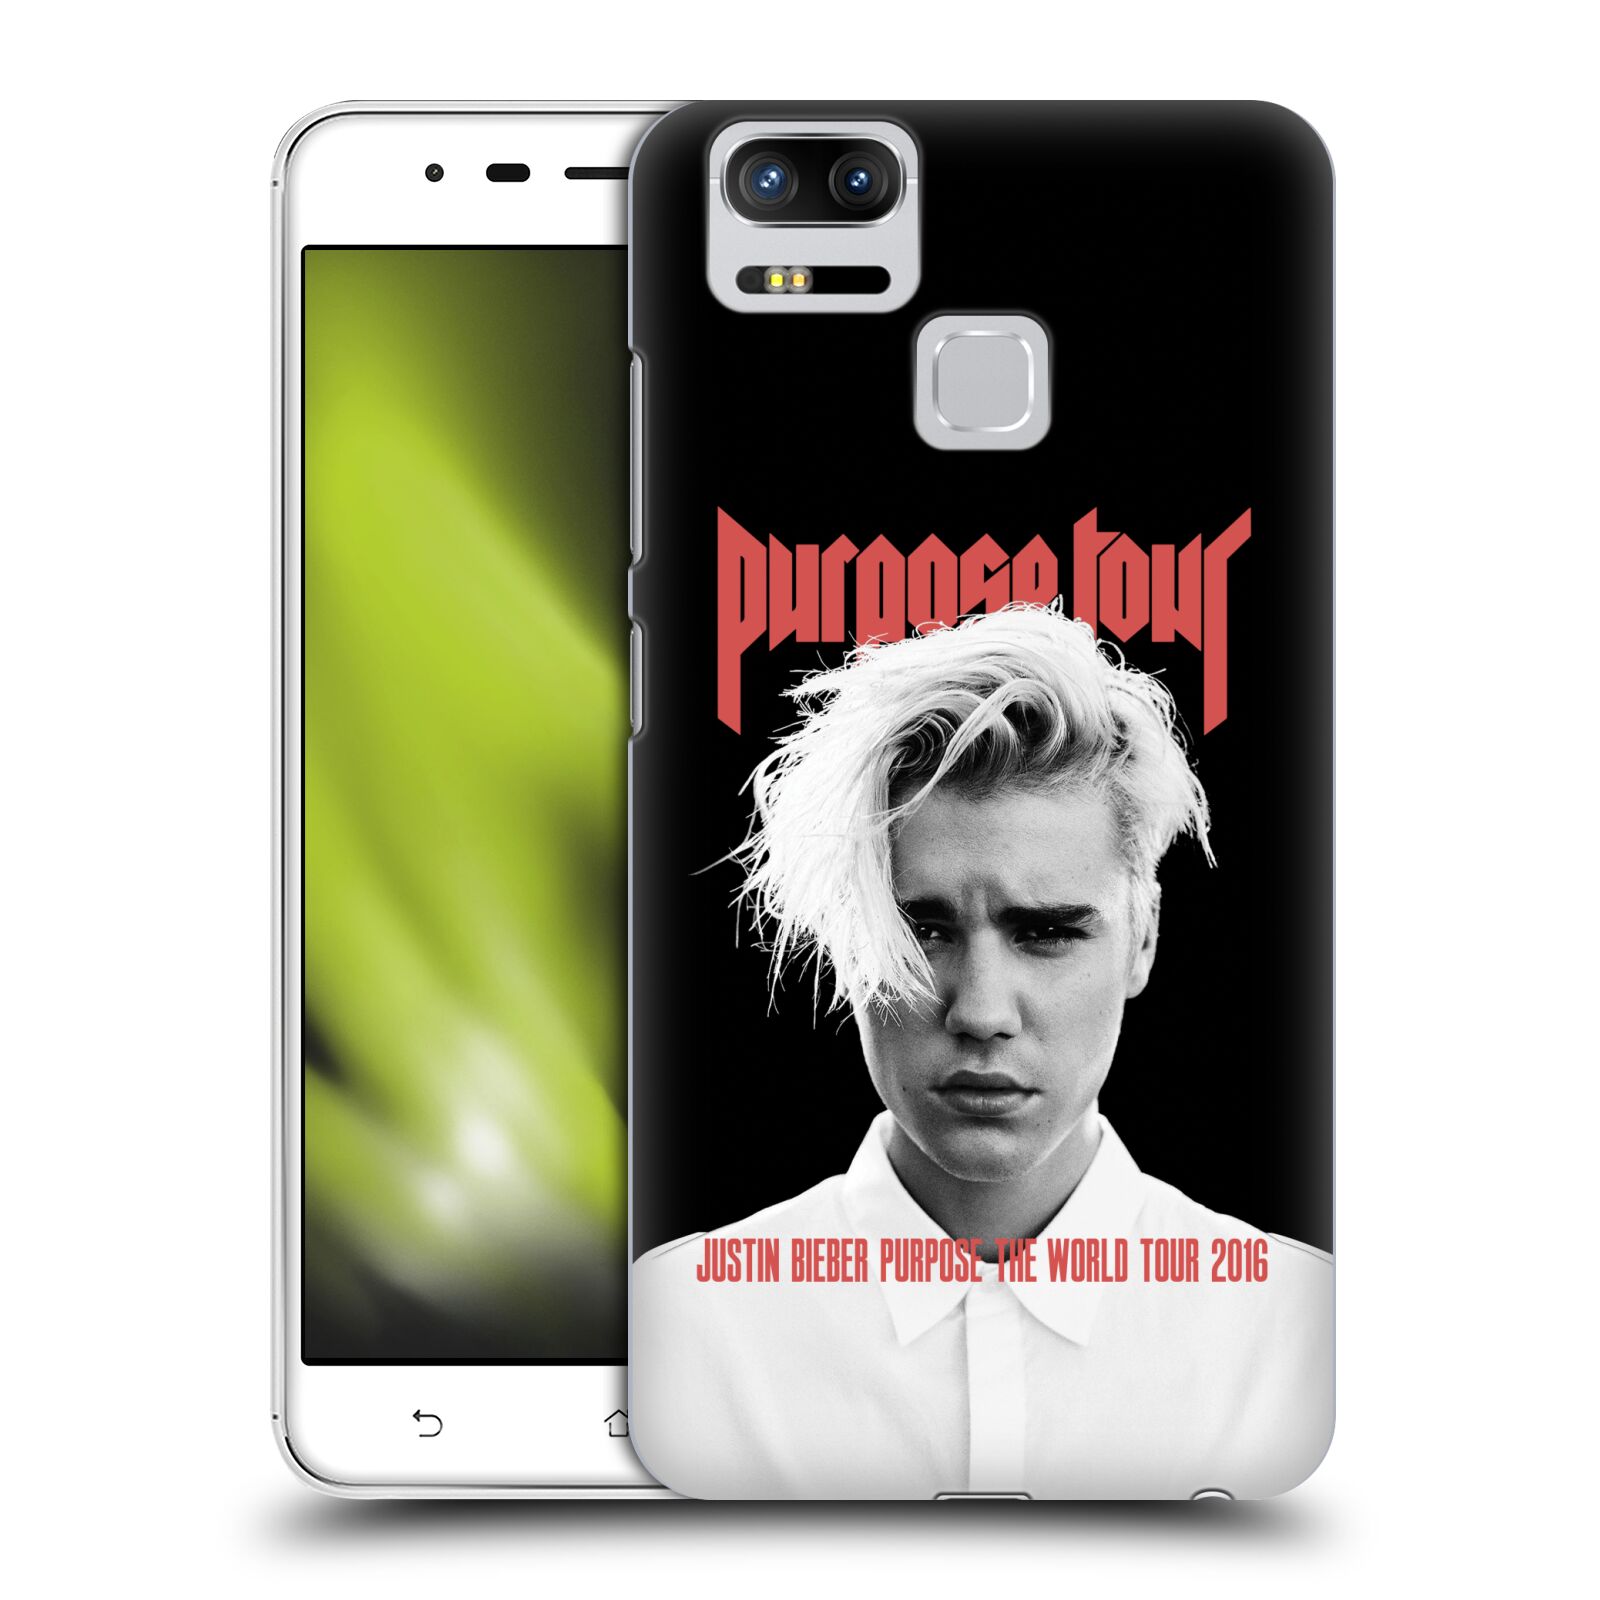 HEAD CASE plastový obal na mobil Asus Zenfone 3 Zoom ZE553KL Justin Bieber foto Purpose tour černé pozadí